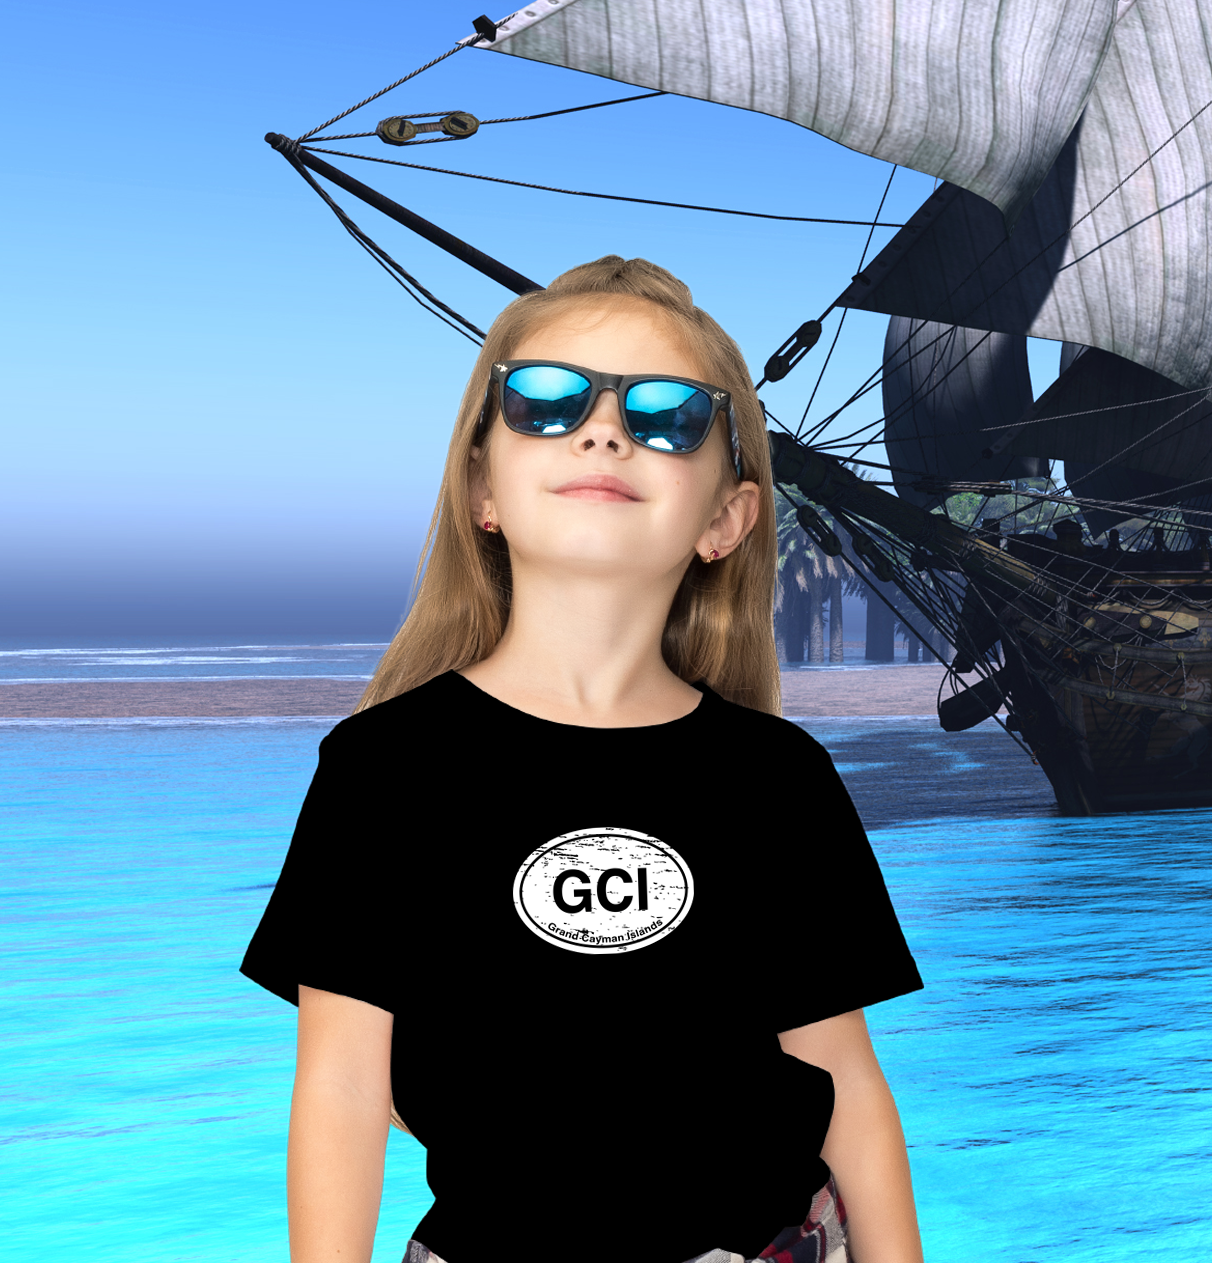 Grand Cayman Classic Youth T-Shirt - My Destination Location